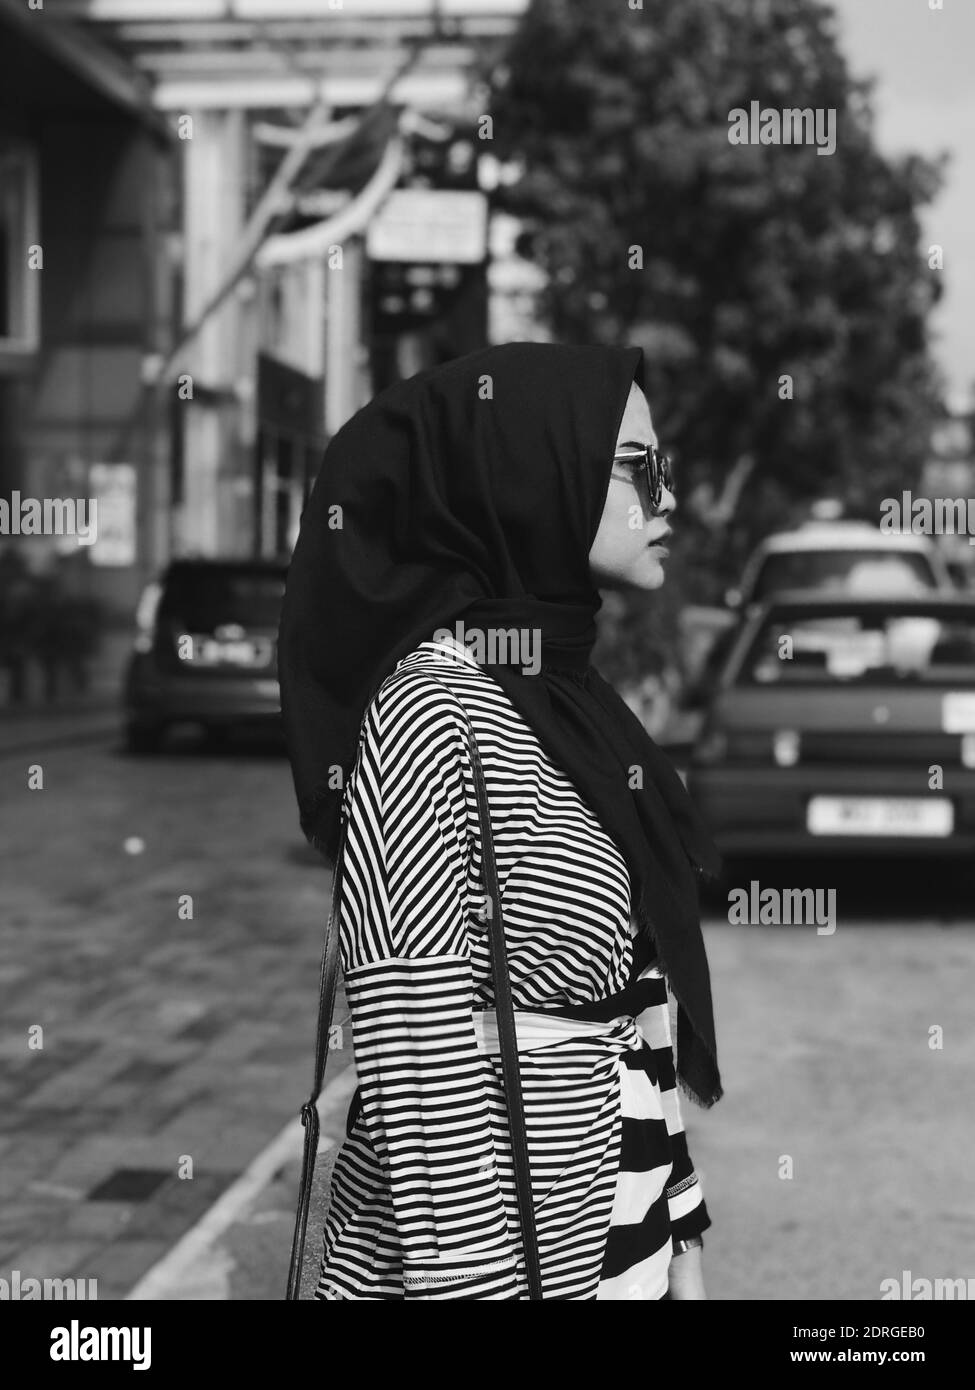 hijab street fashion